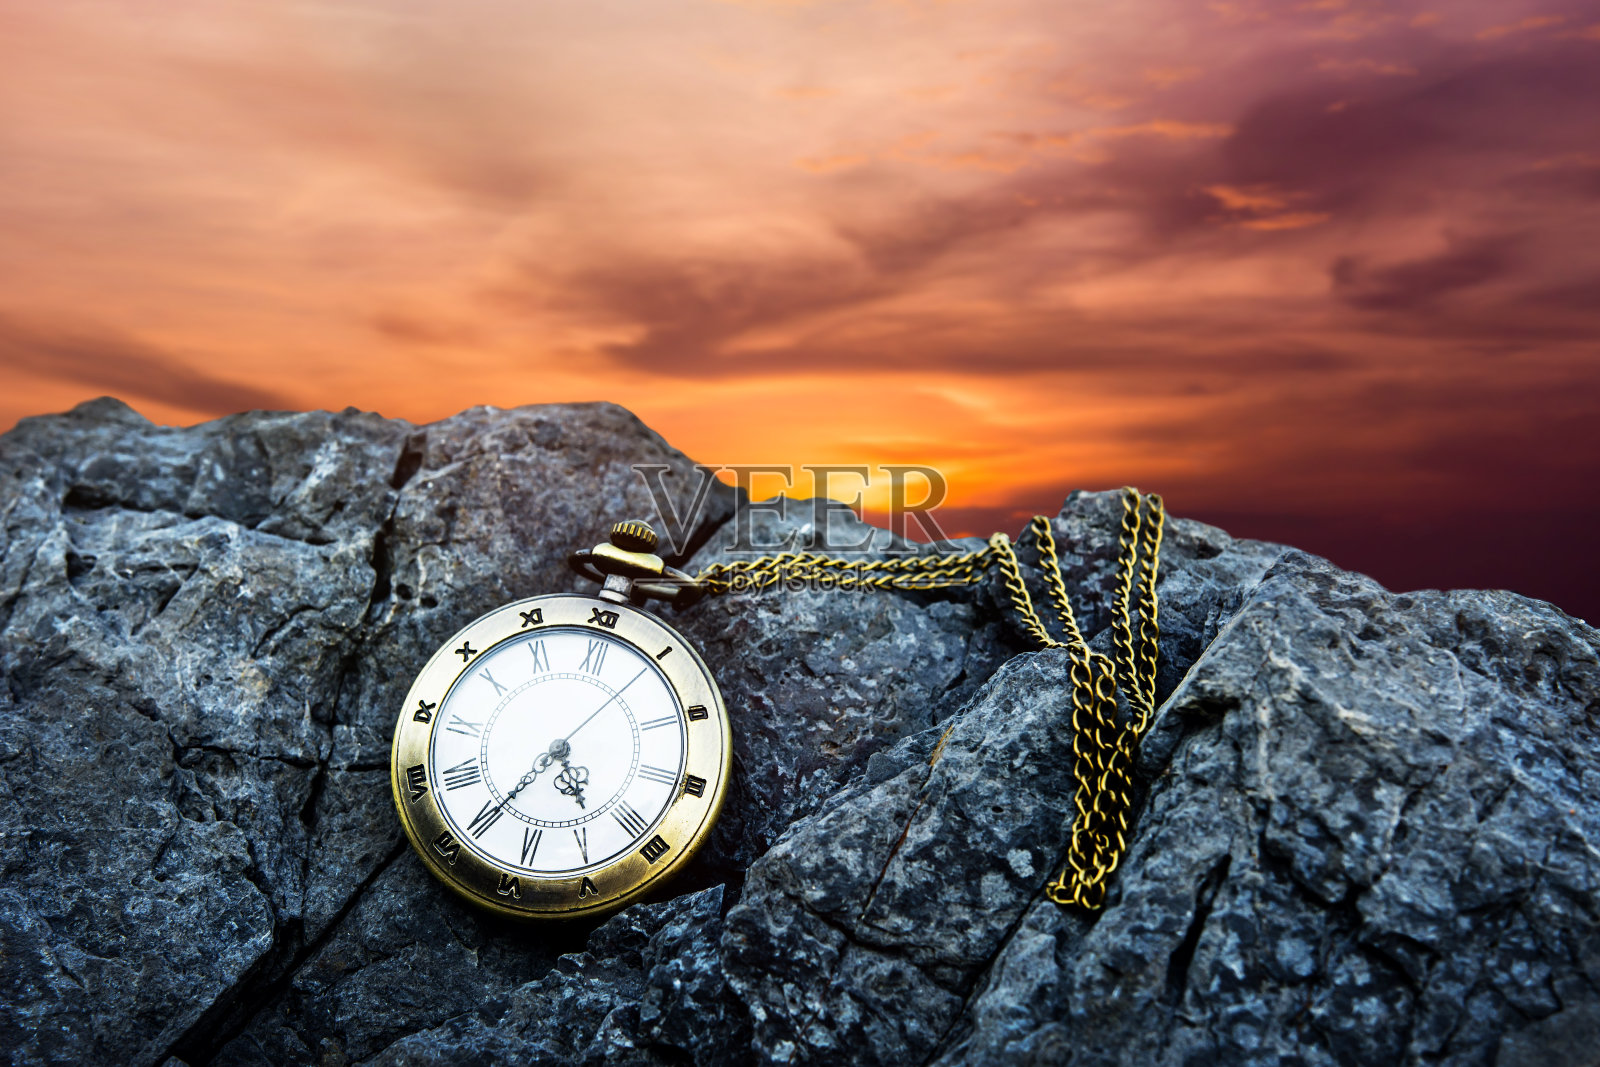 时间的概念。Vintage Golden Pocket Watch on island rock, Sunrise or Sunset Sky as background照片摄影图片